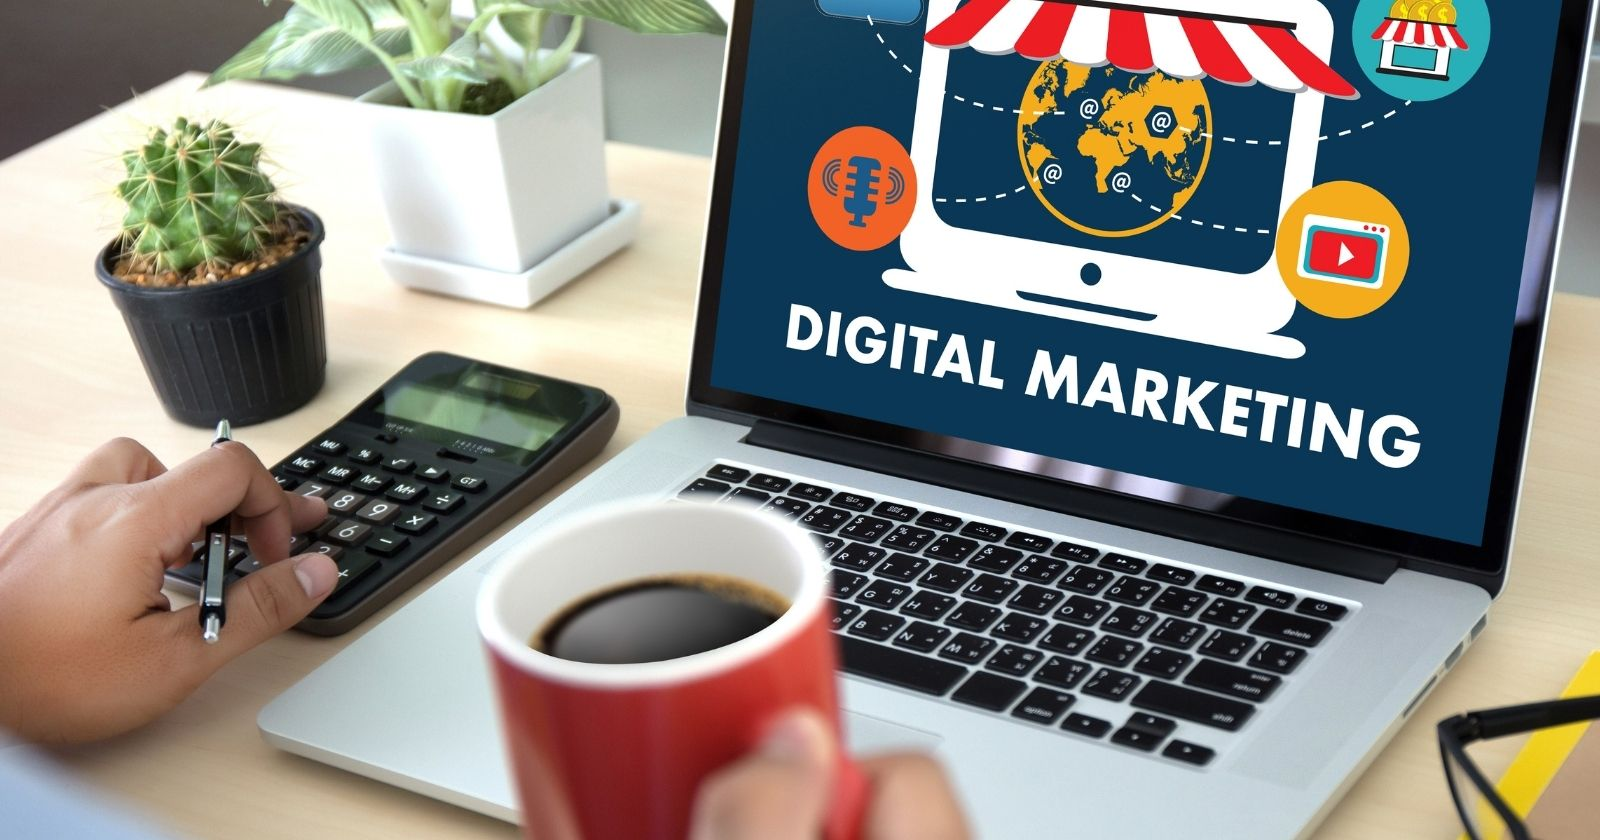 laptop with a text "Digital marketing": Digital Marketing vs Affiliate Marketing